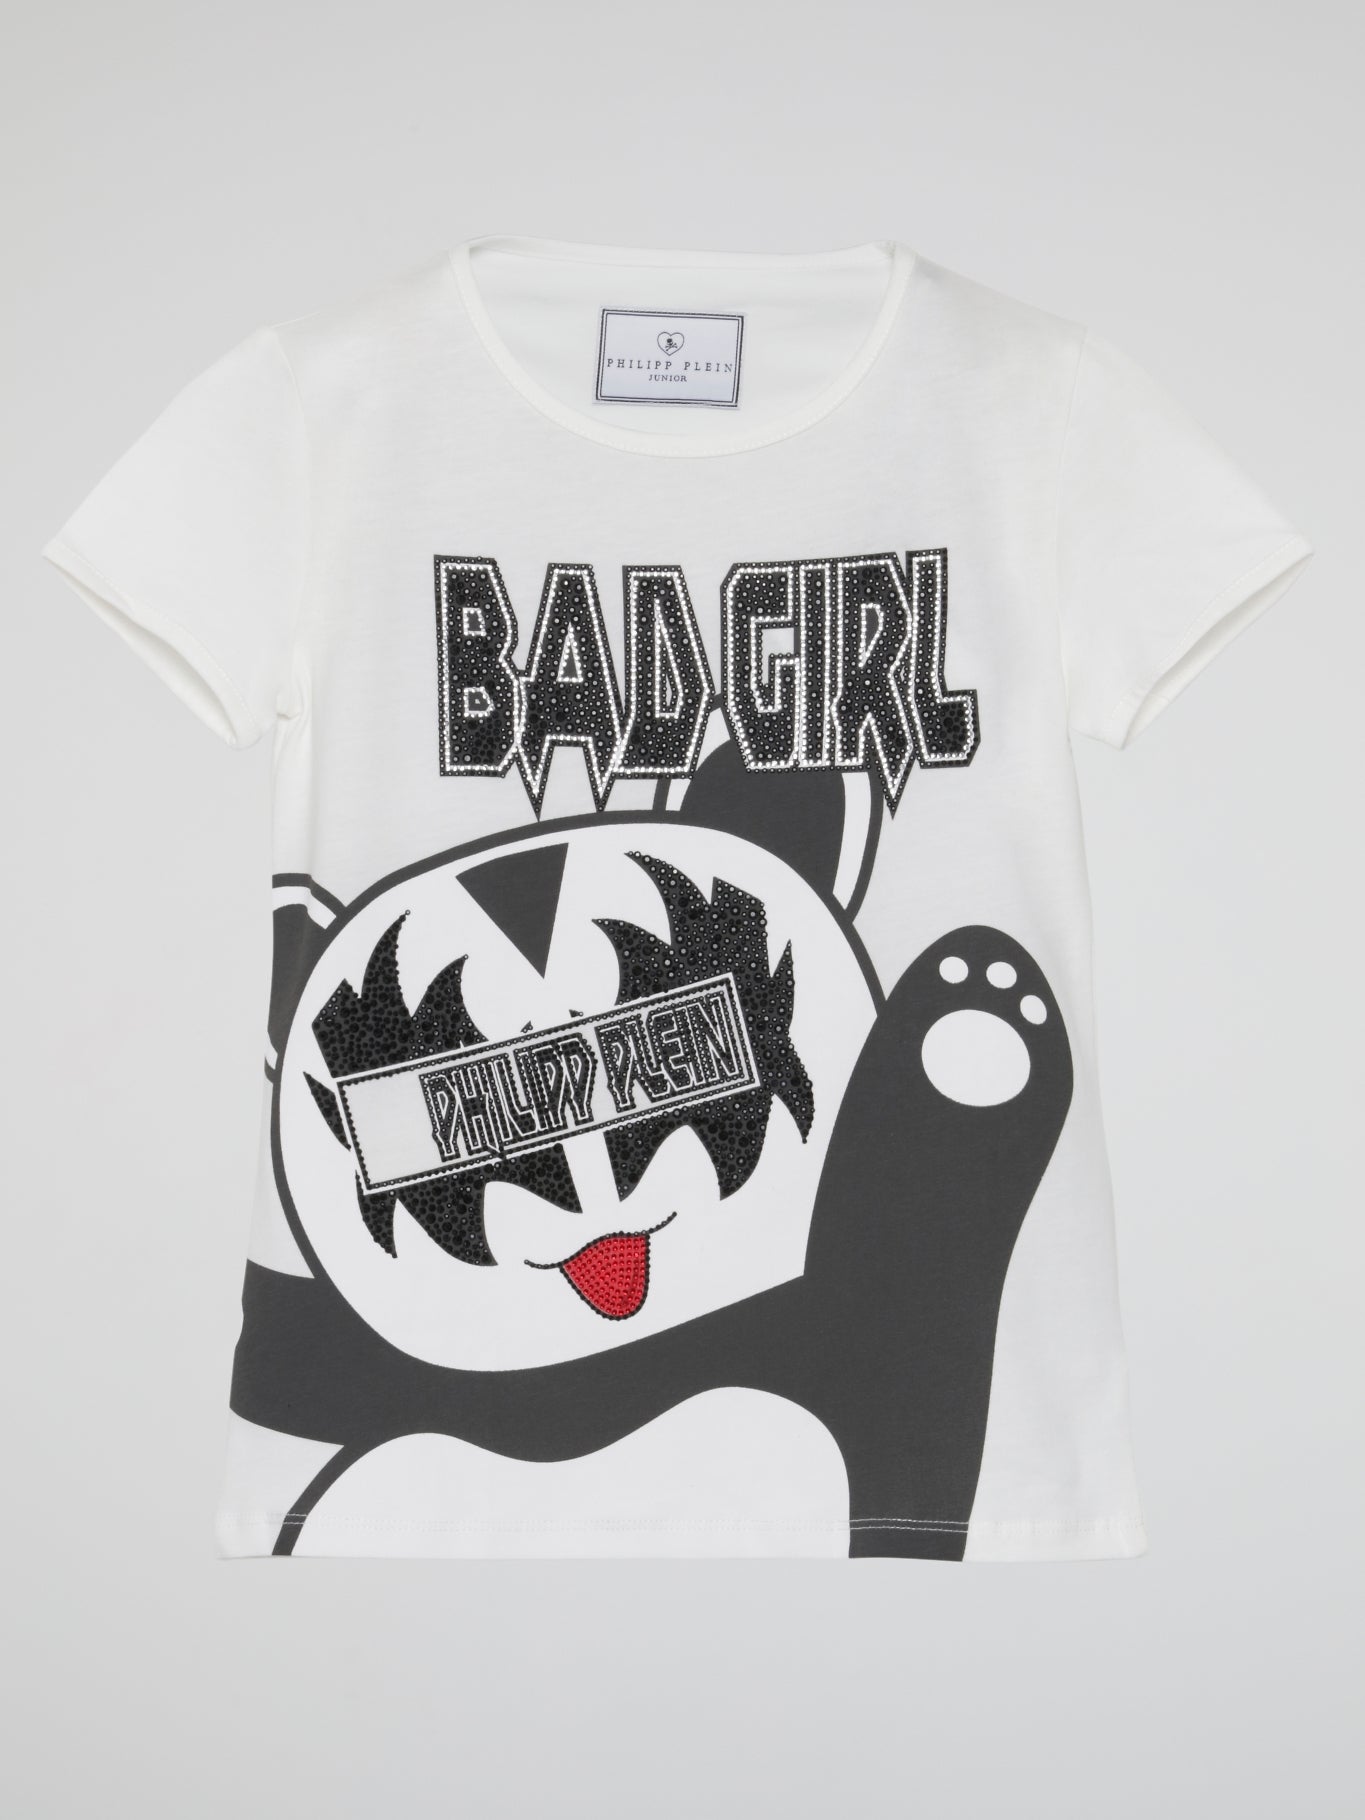 Amazon Jungle Billy Giftig Bad Girl White T-shirt (Kids) – Maison-B-More Global Store